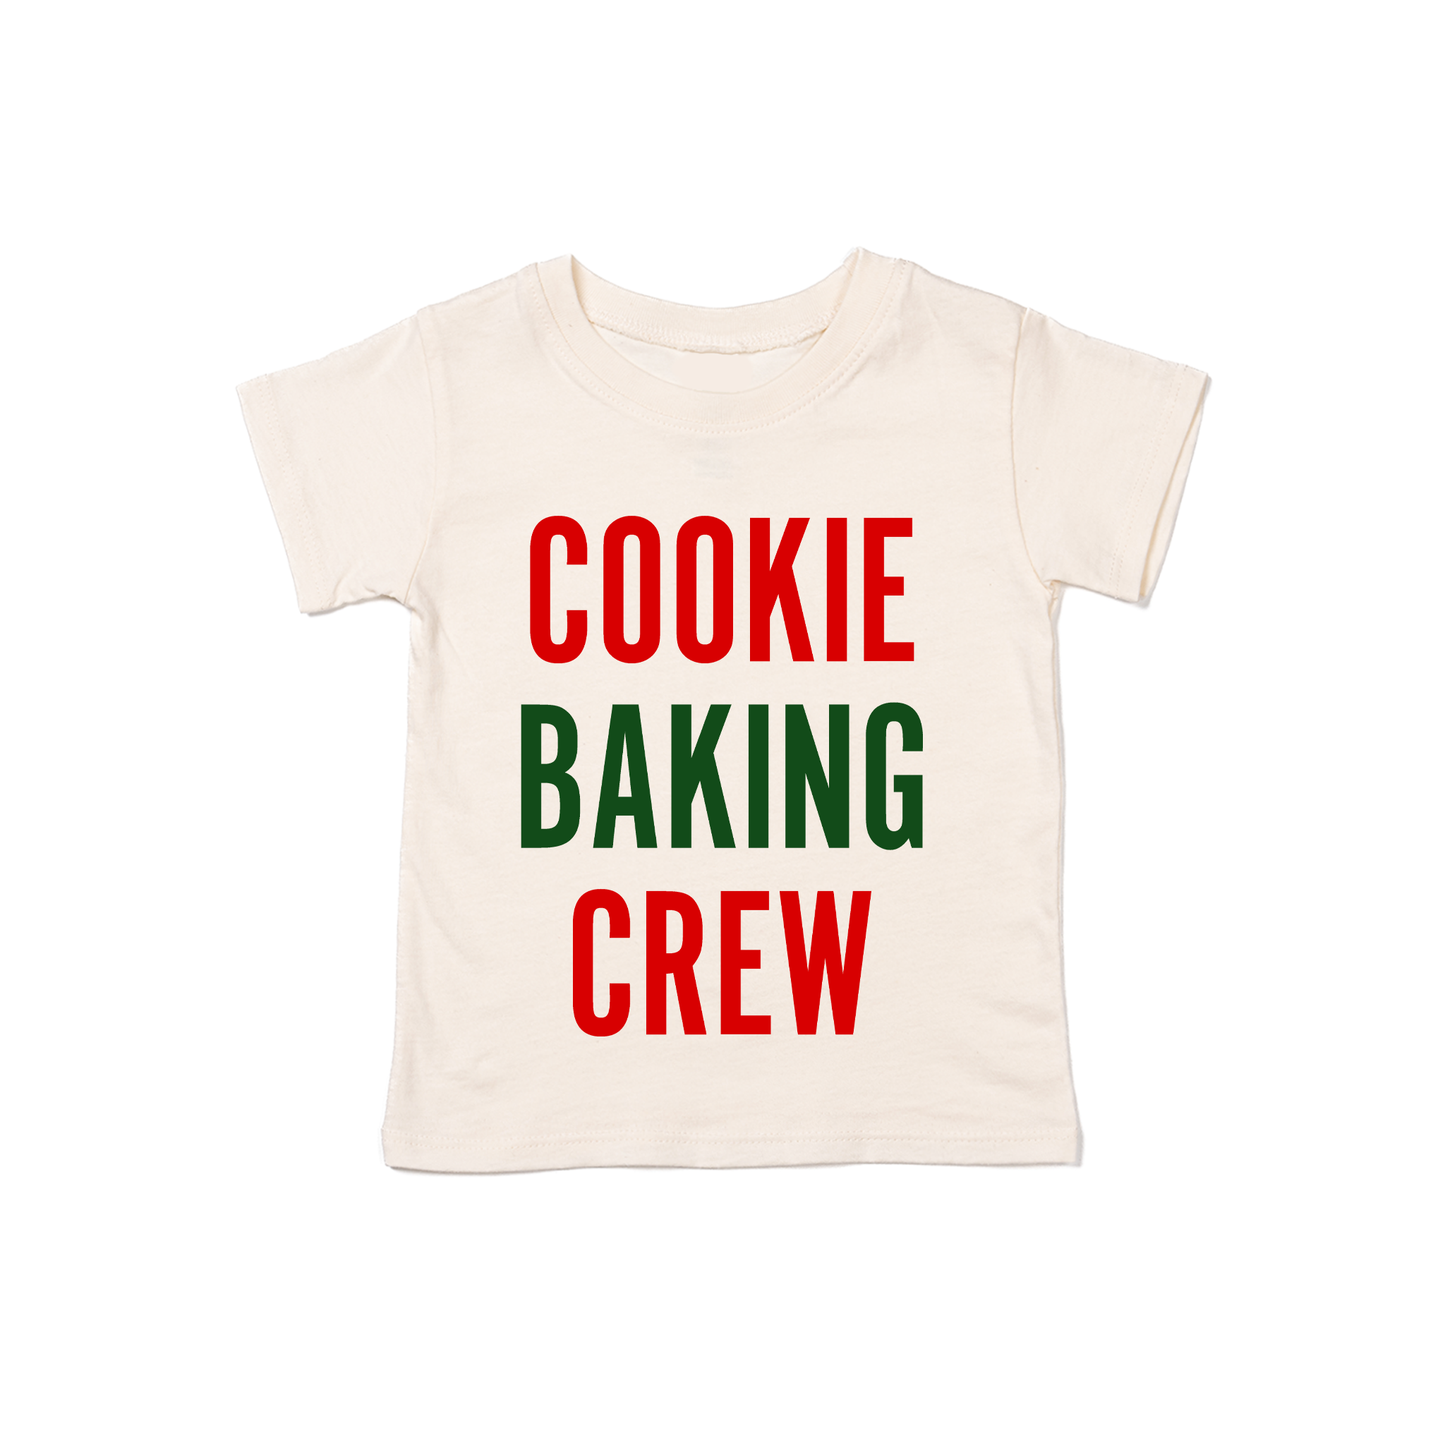 Cookie Baking Crew - Kids Tee (Natural)